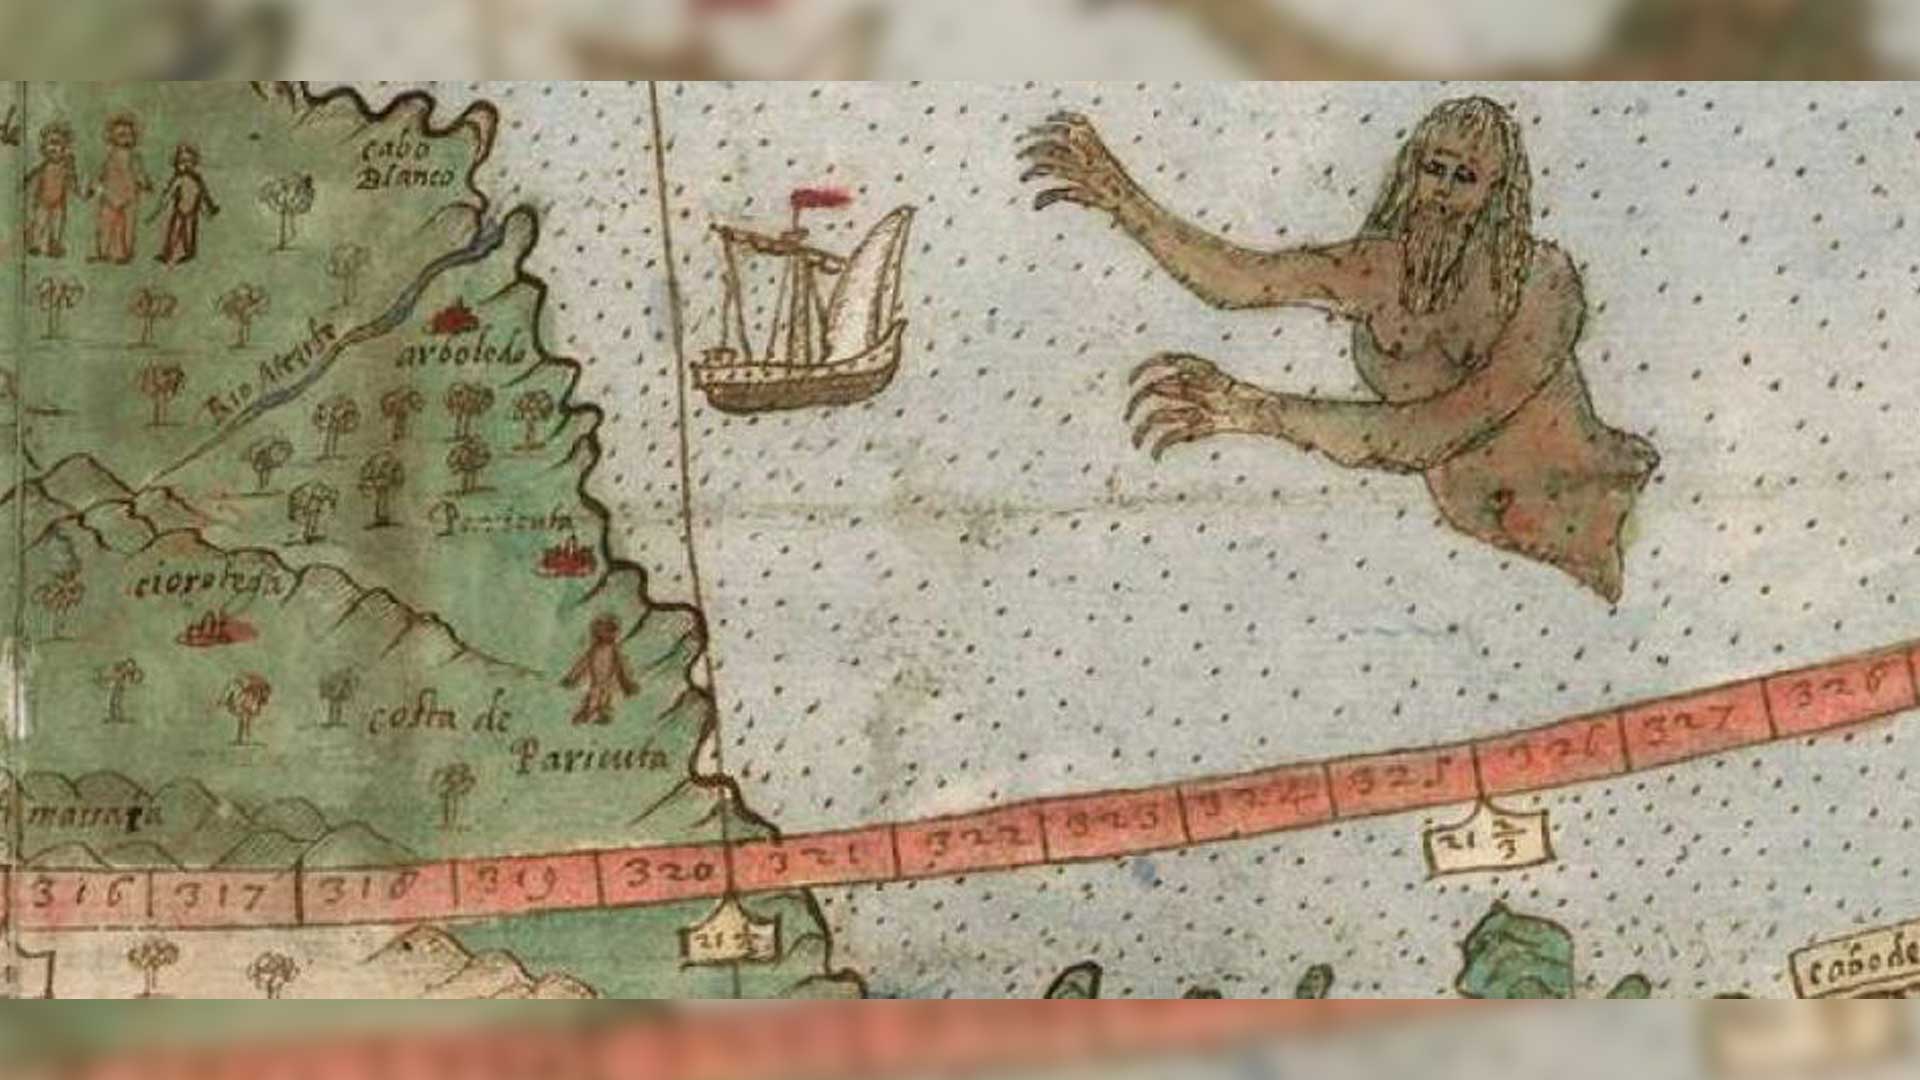 INCREÍBLE - Seres mitológicos representados en este antiguo mapa restaurado